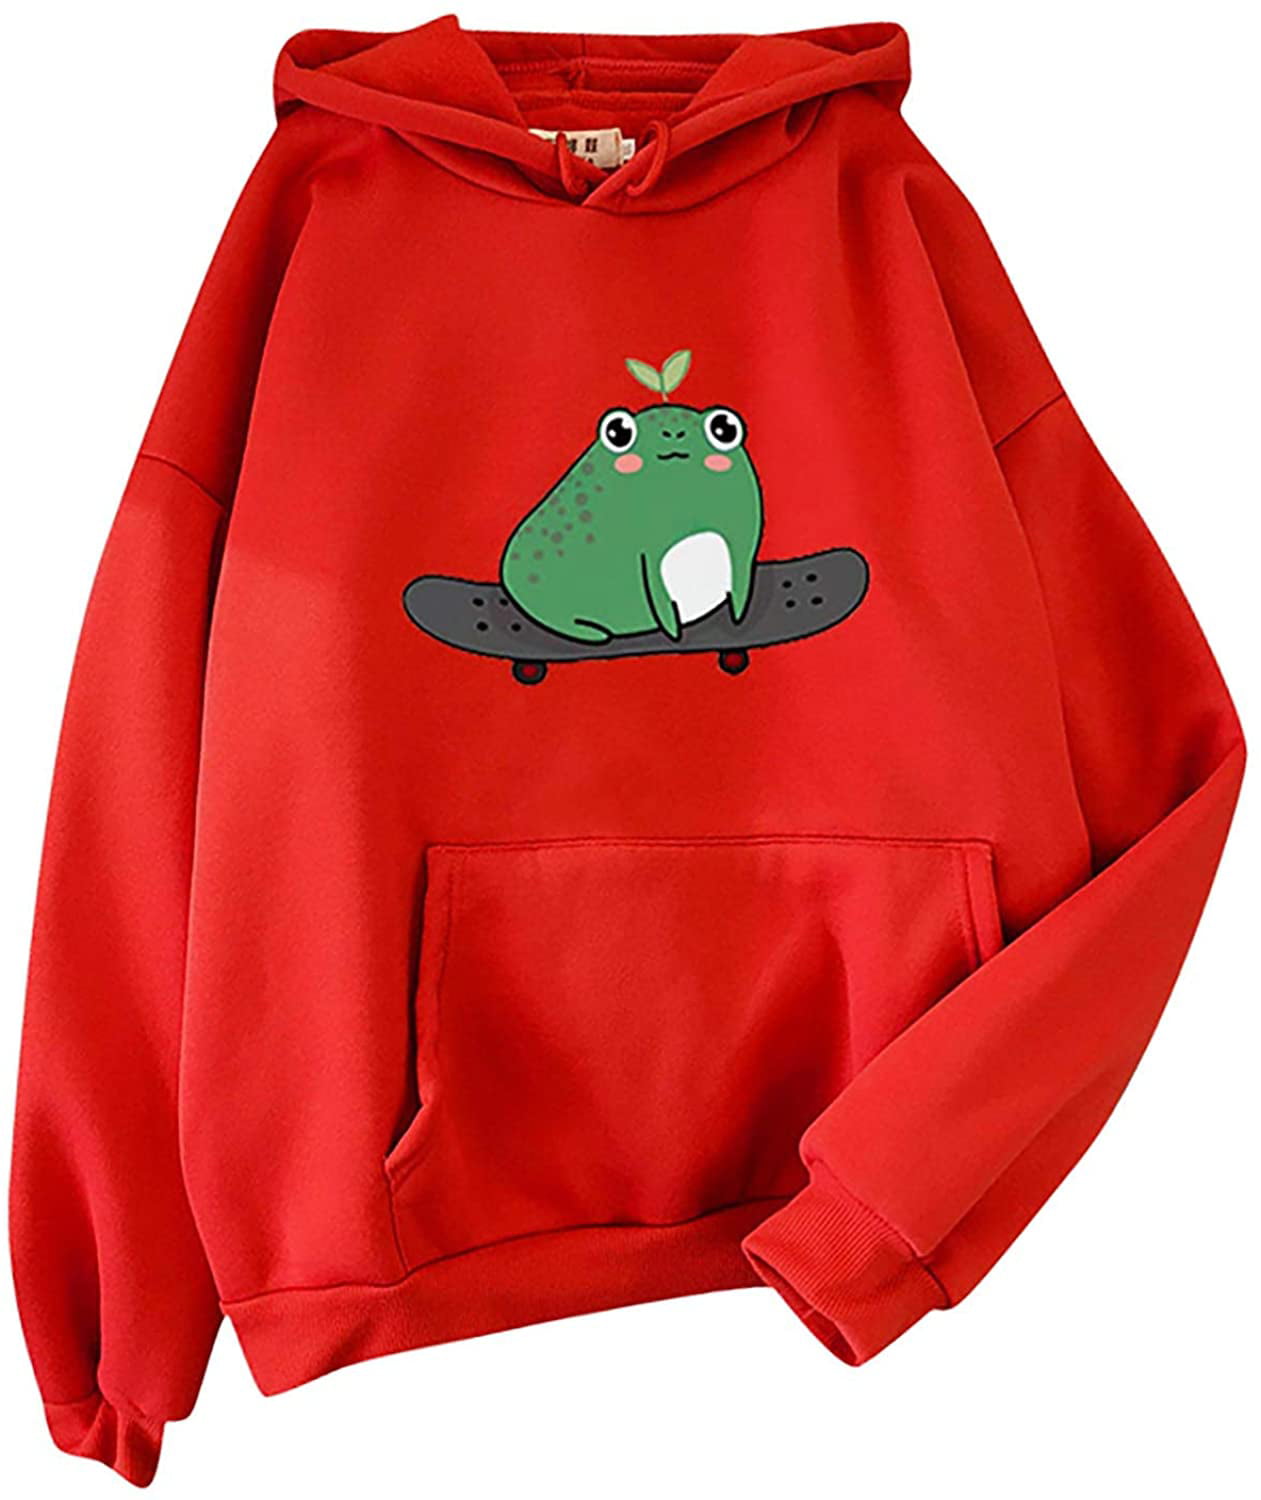 Women's Girls Sweatshirt Cute Frog Rabbit Ears Hooded Casual Loose Pullover Tops